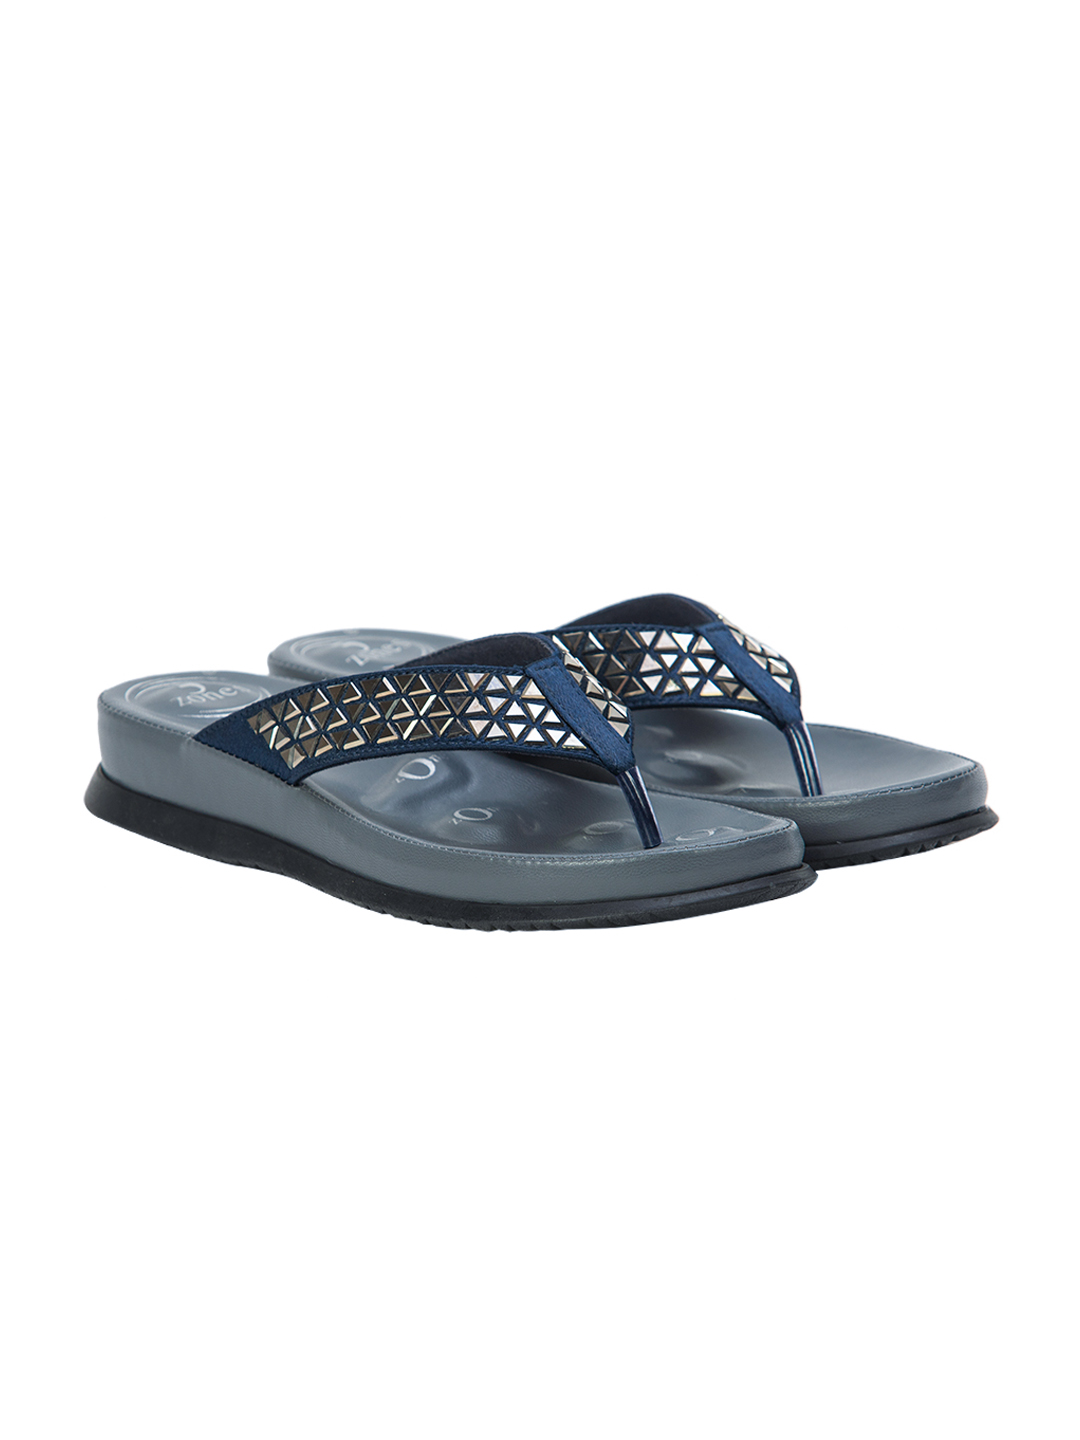 Buy Von Wellx Germany Comfort Beam Blue Slippers Online in Madhya Pradesh